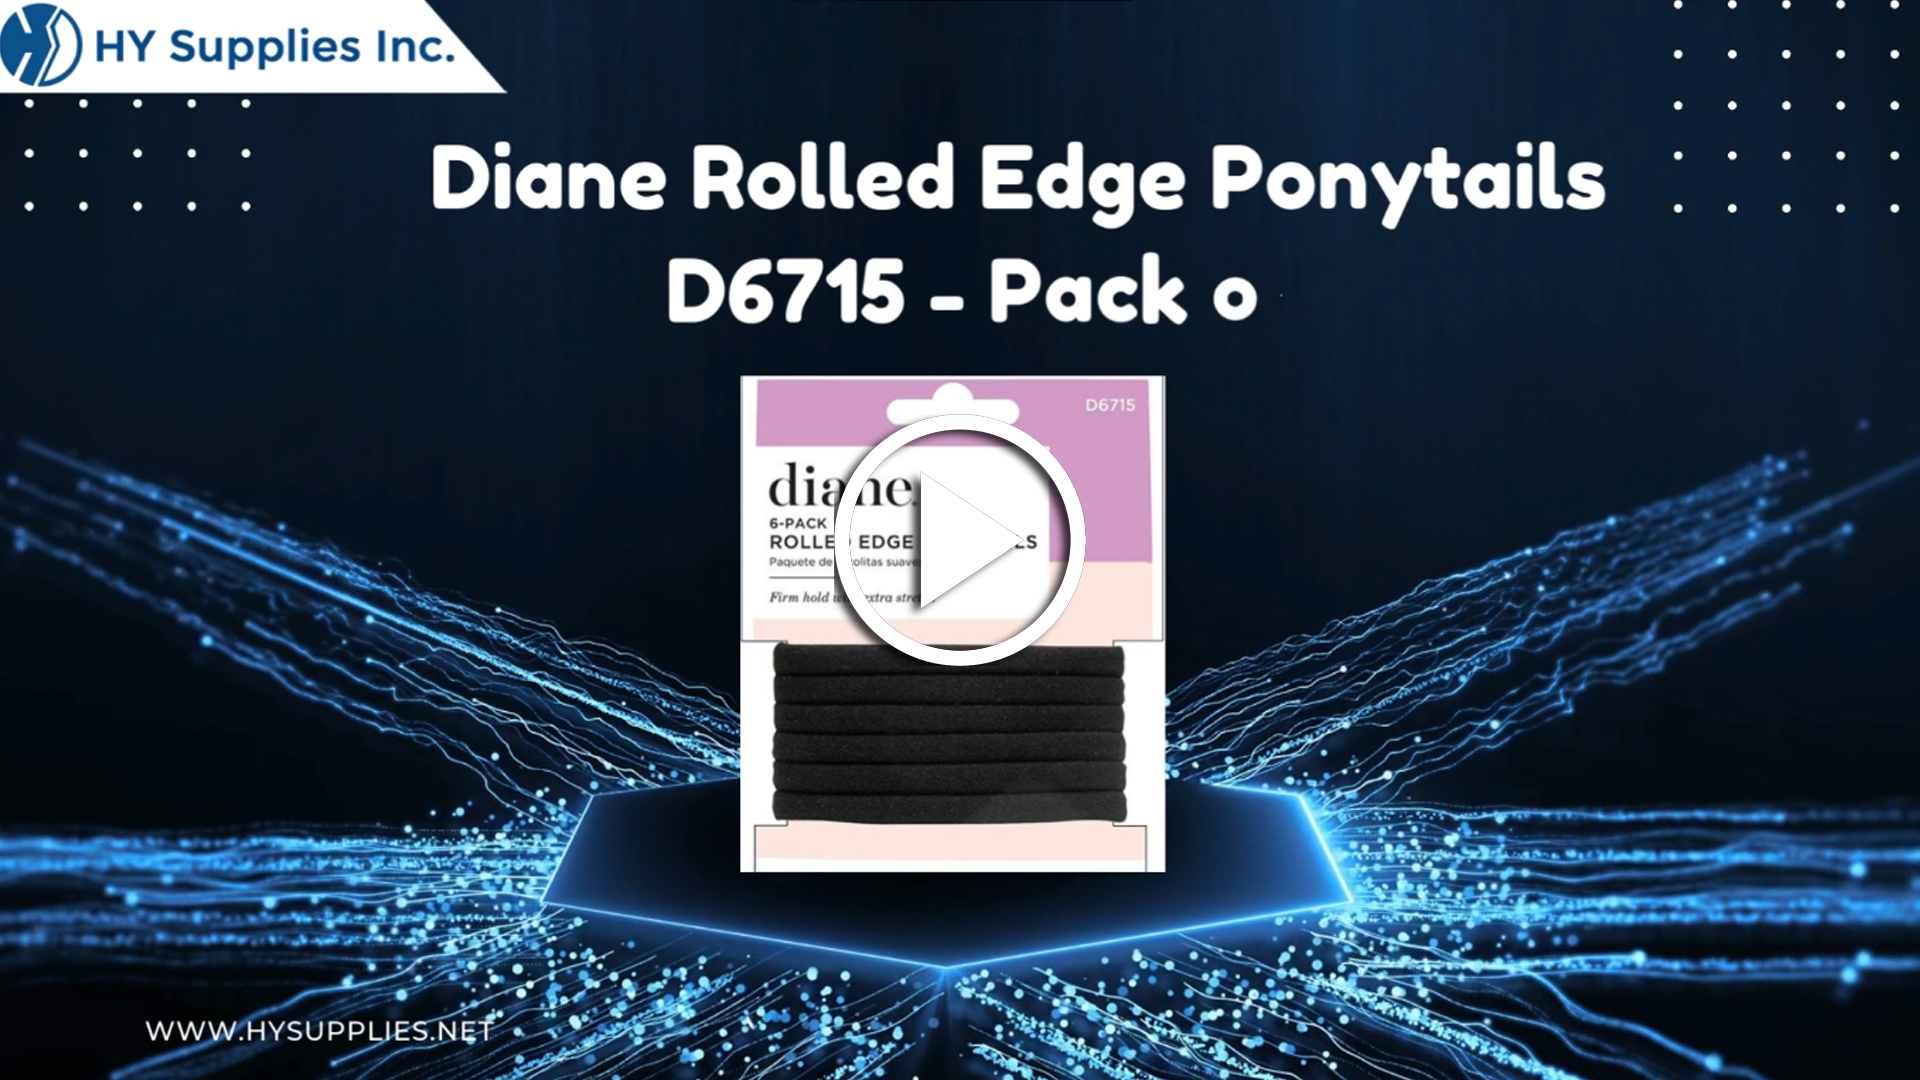 Diane Rolled Edge Ponytails D6715 - Pack of 6